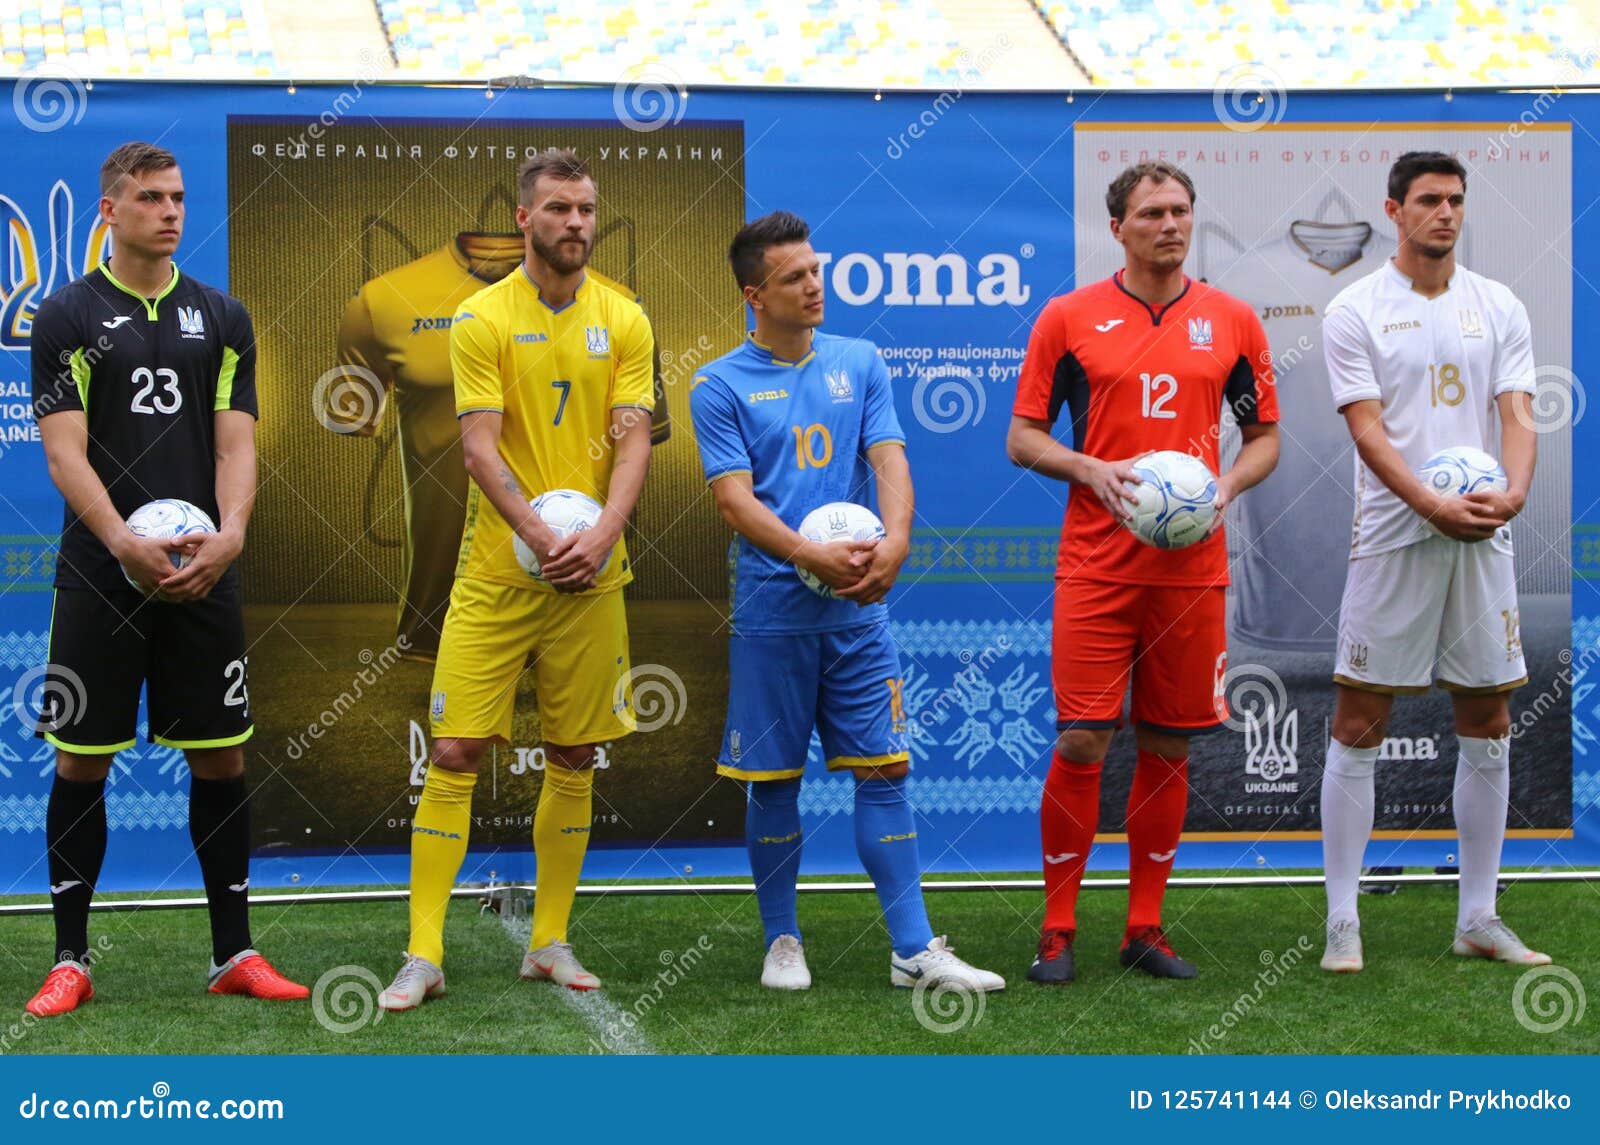 ukraine national team jersey